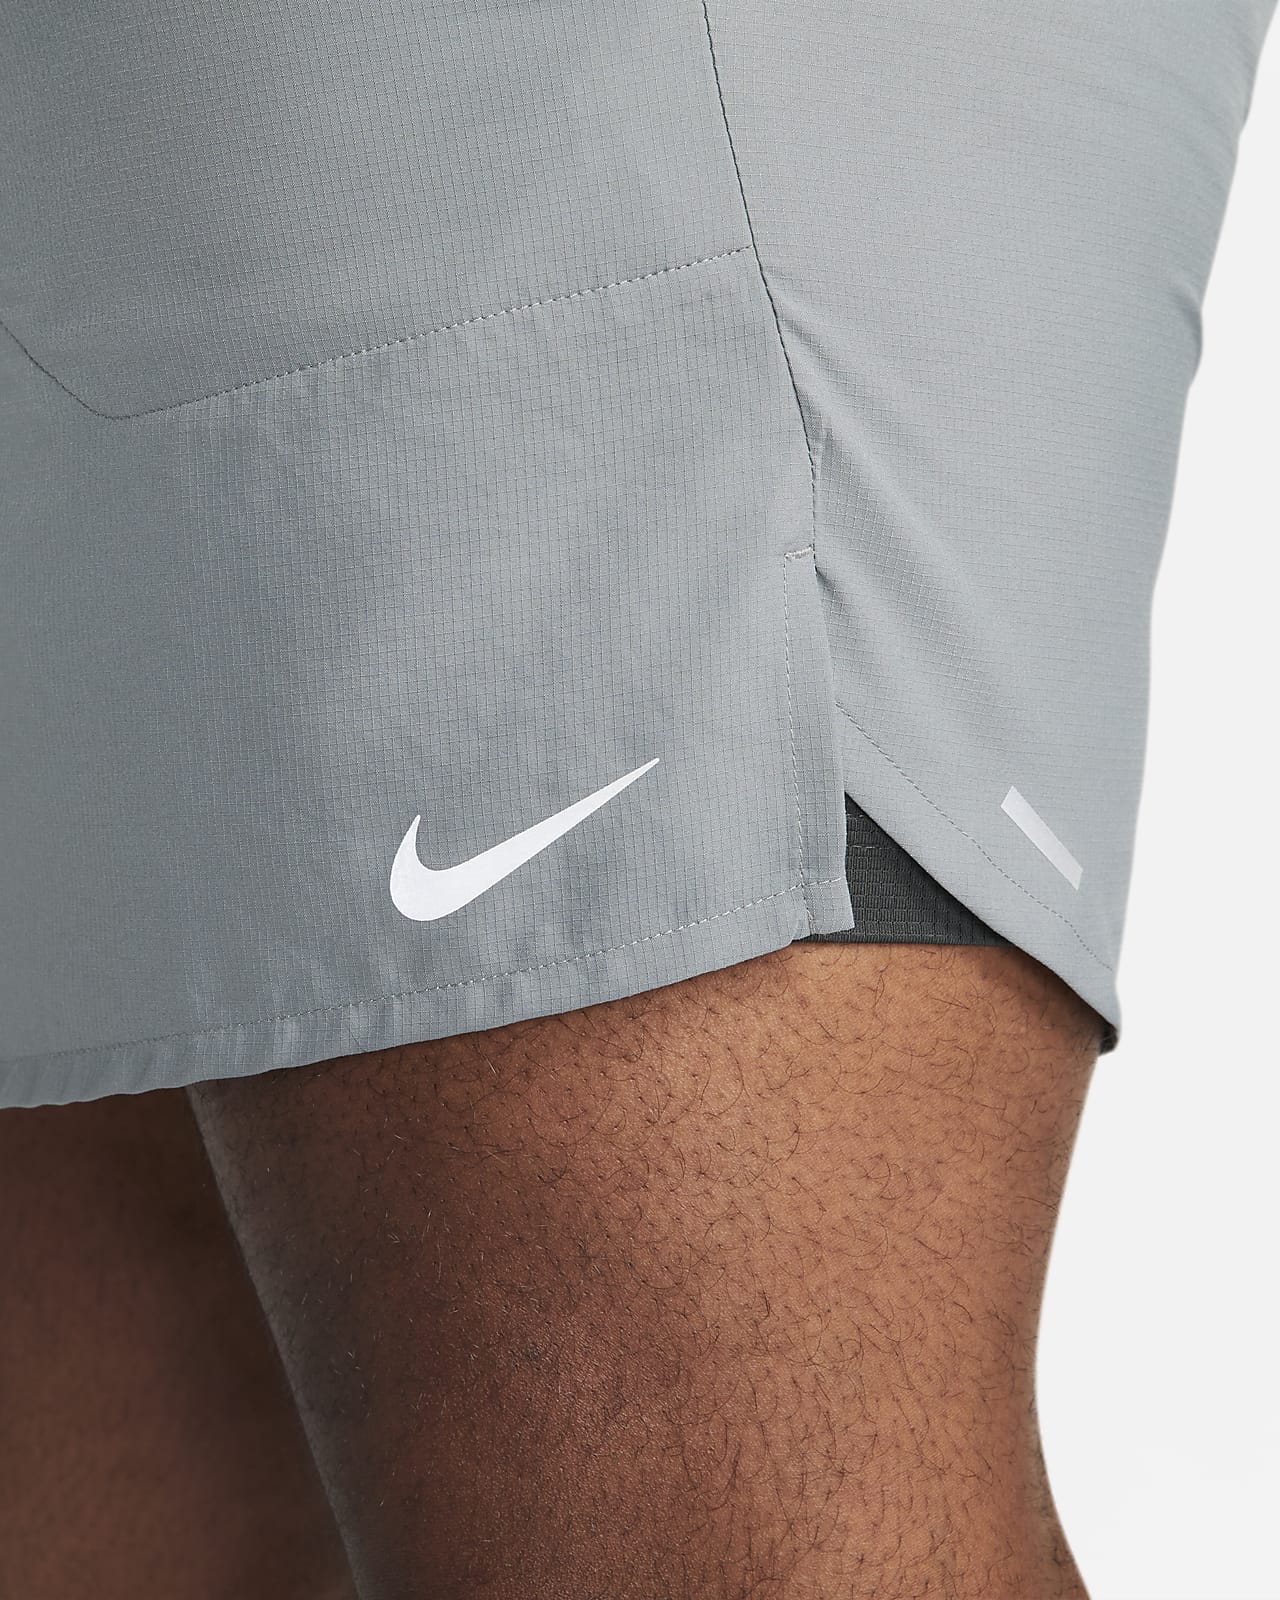 NEW Nike Dri-Fit 7 Stride 2-in-1 Running Shorts Black Size 2XL